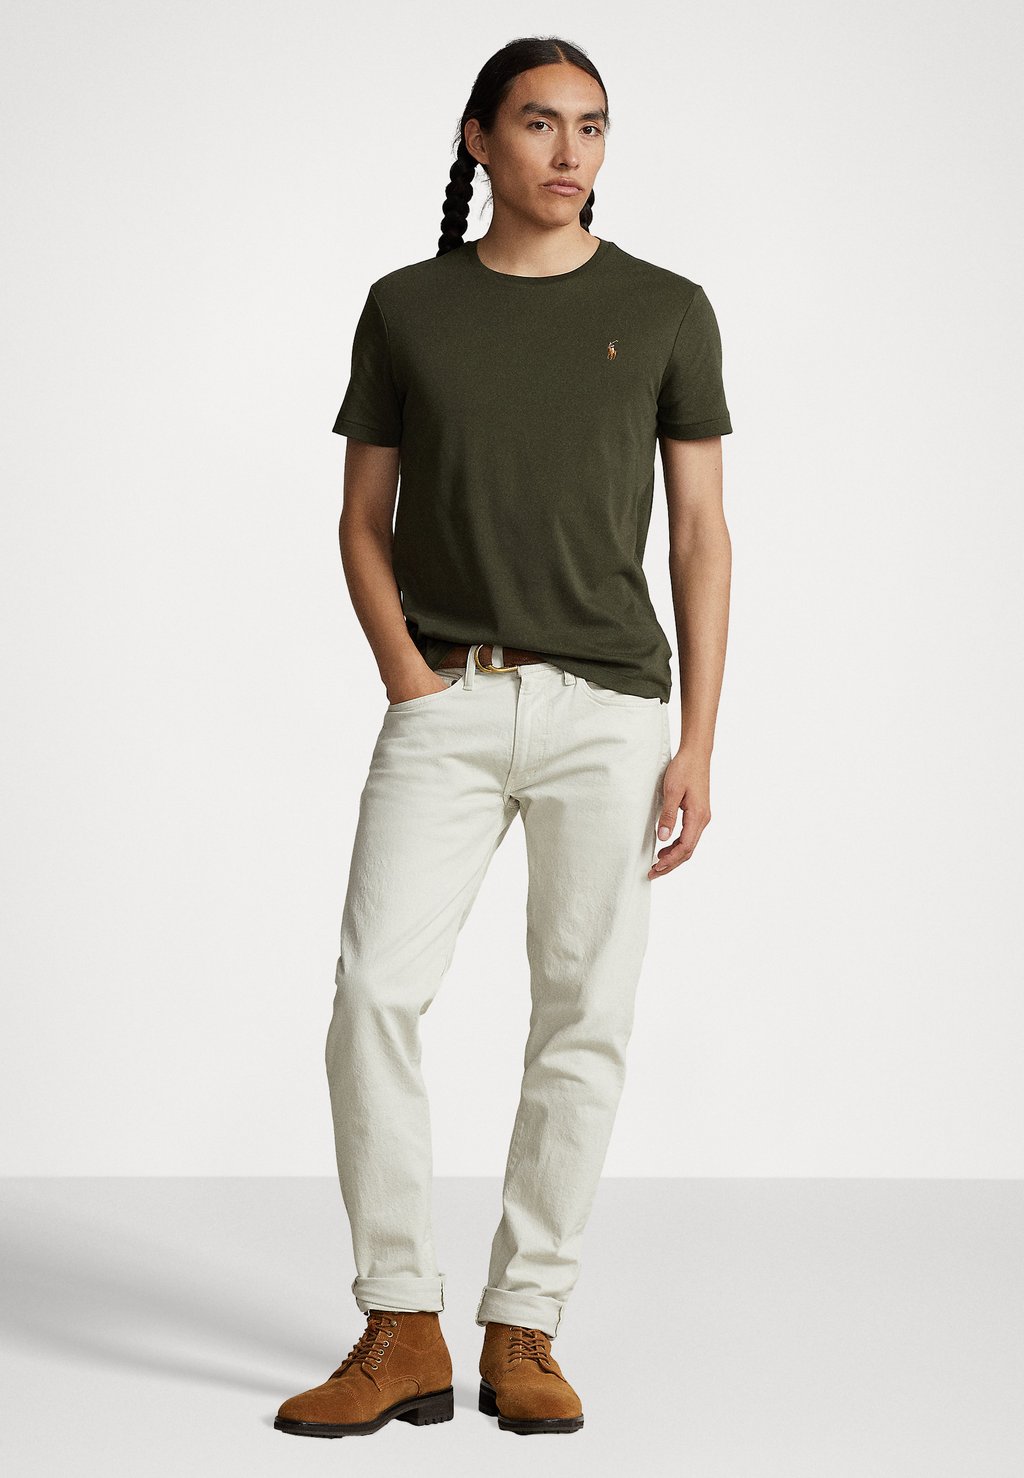 Базовая футболка SHORT SLEEVE Polo Ralph Lauren, летний оливковый